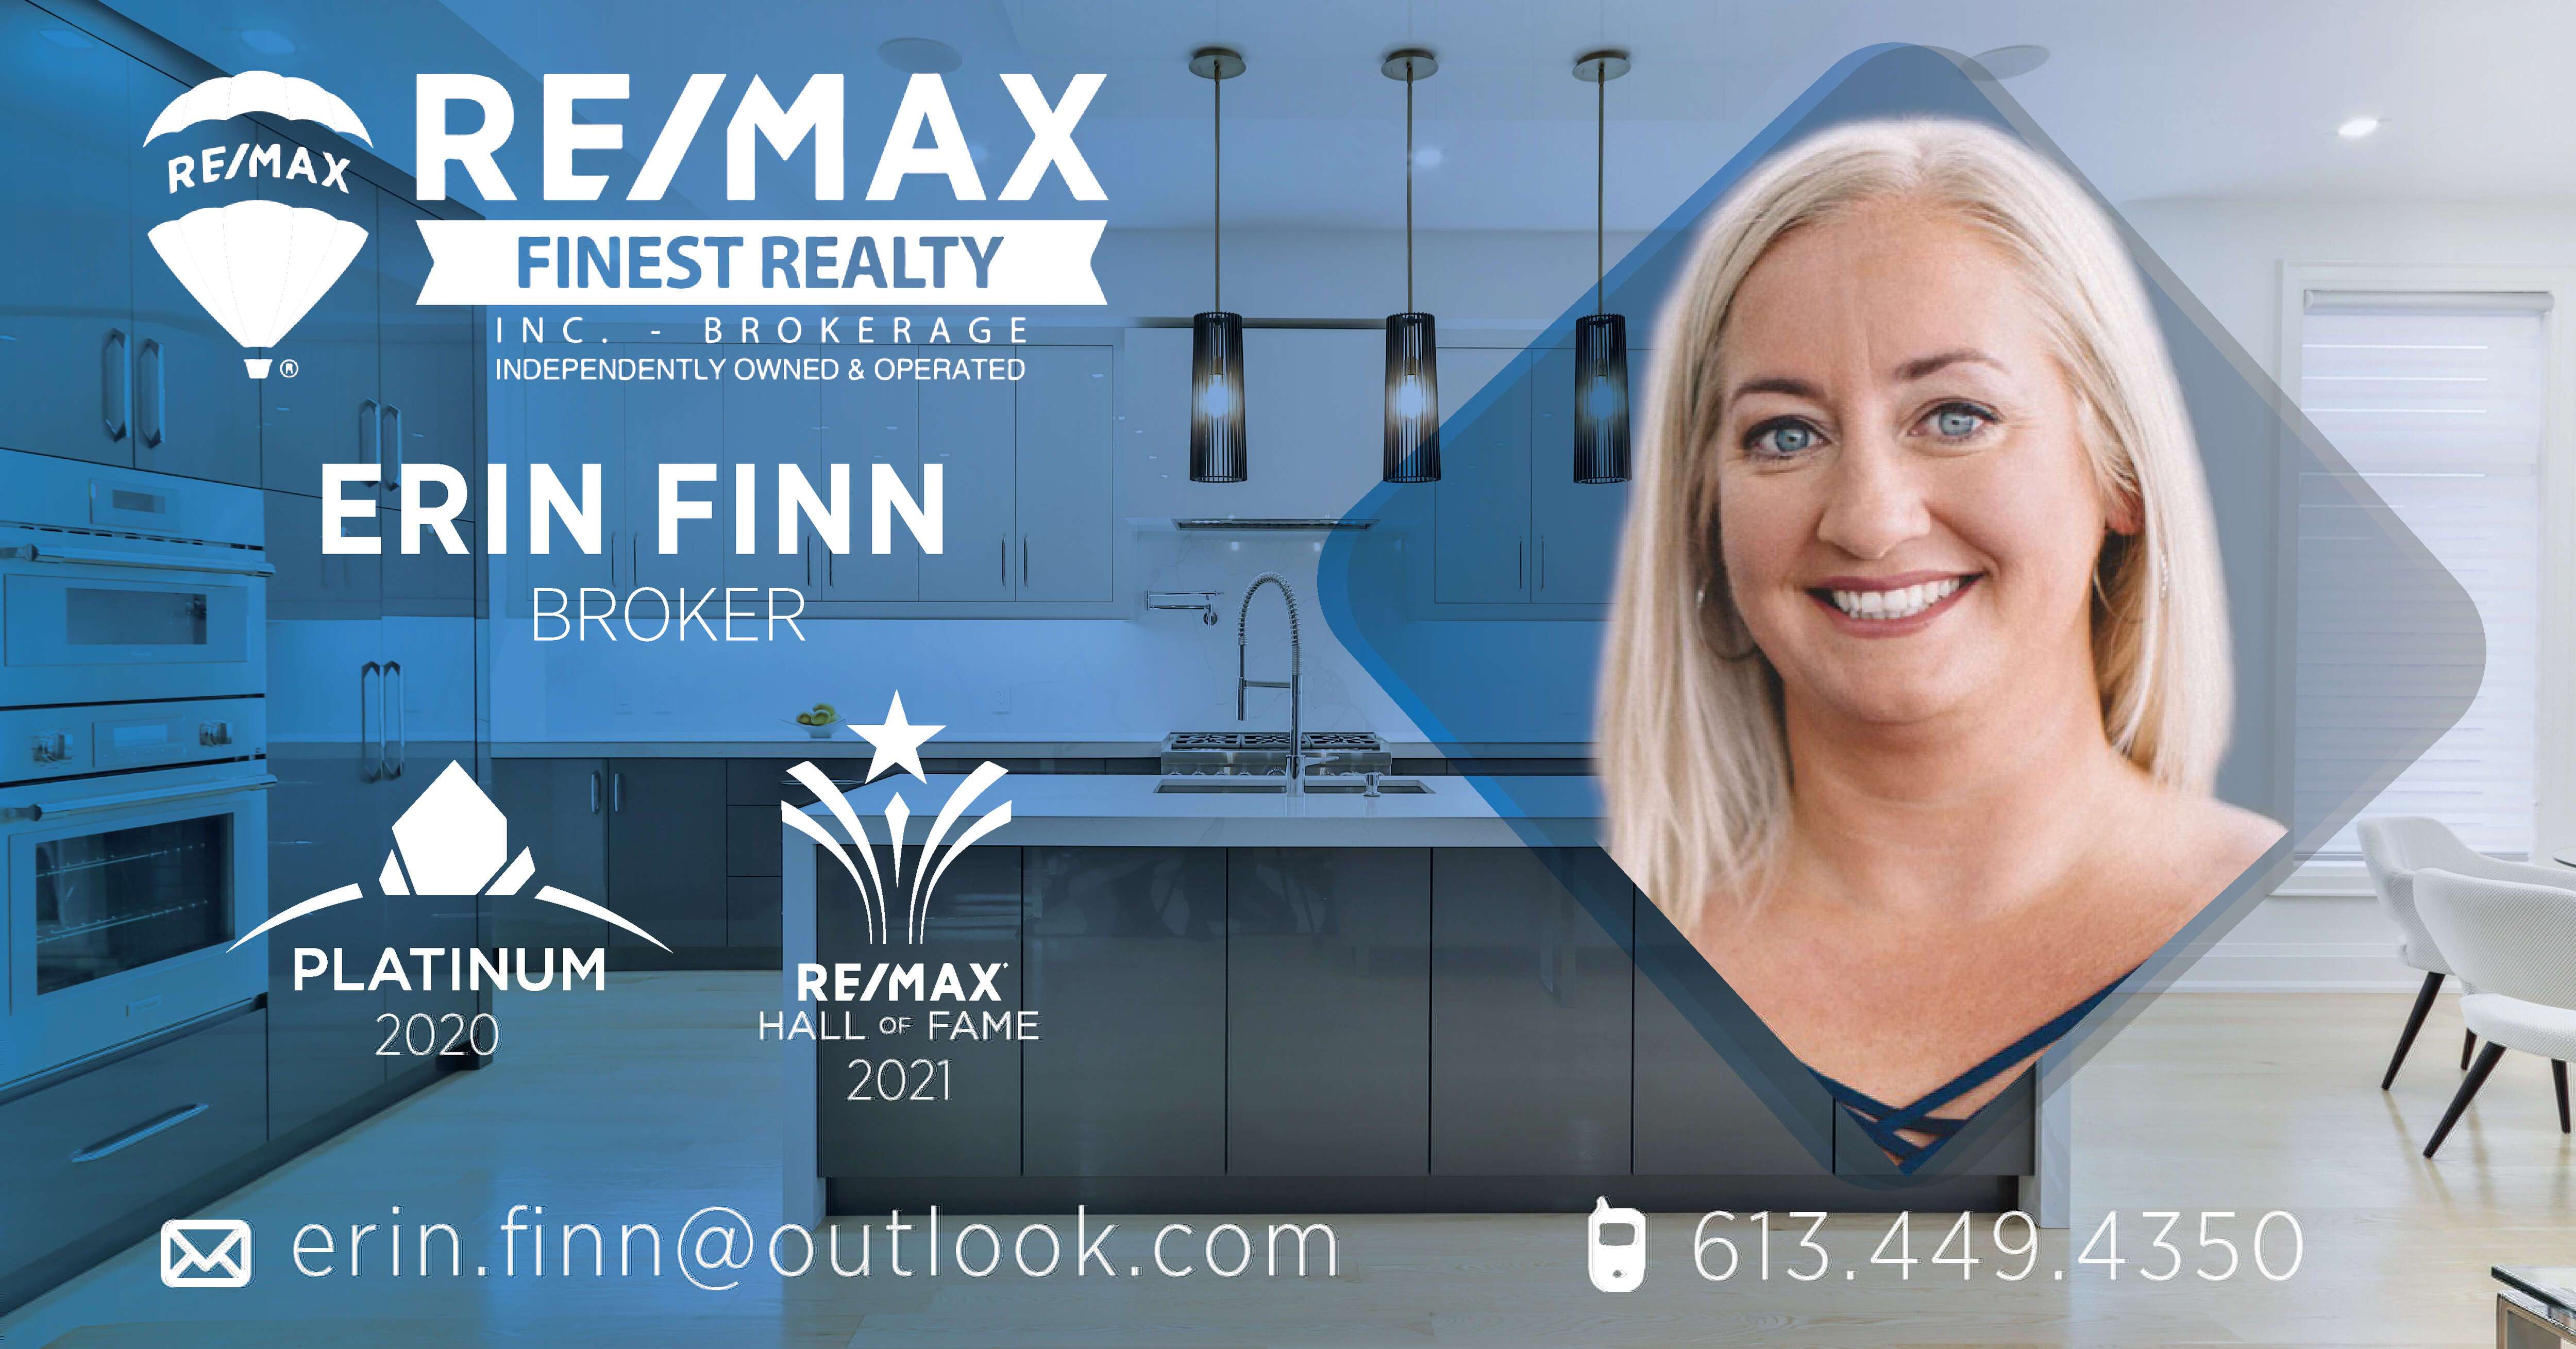 Remax Finest Realty - Erin Finn